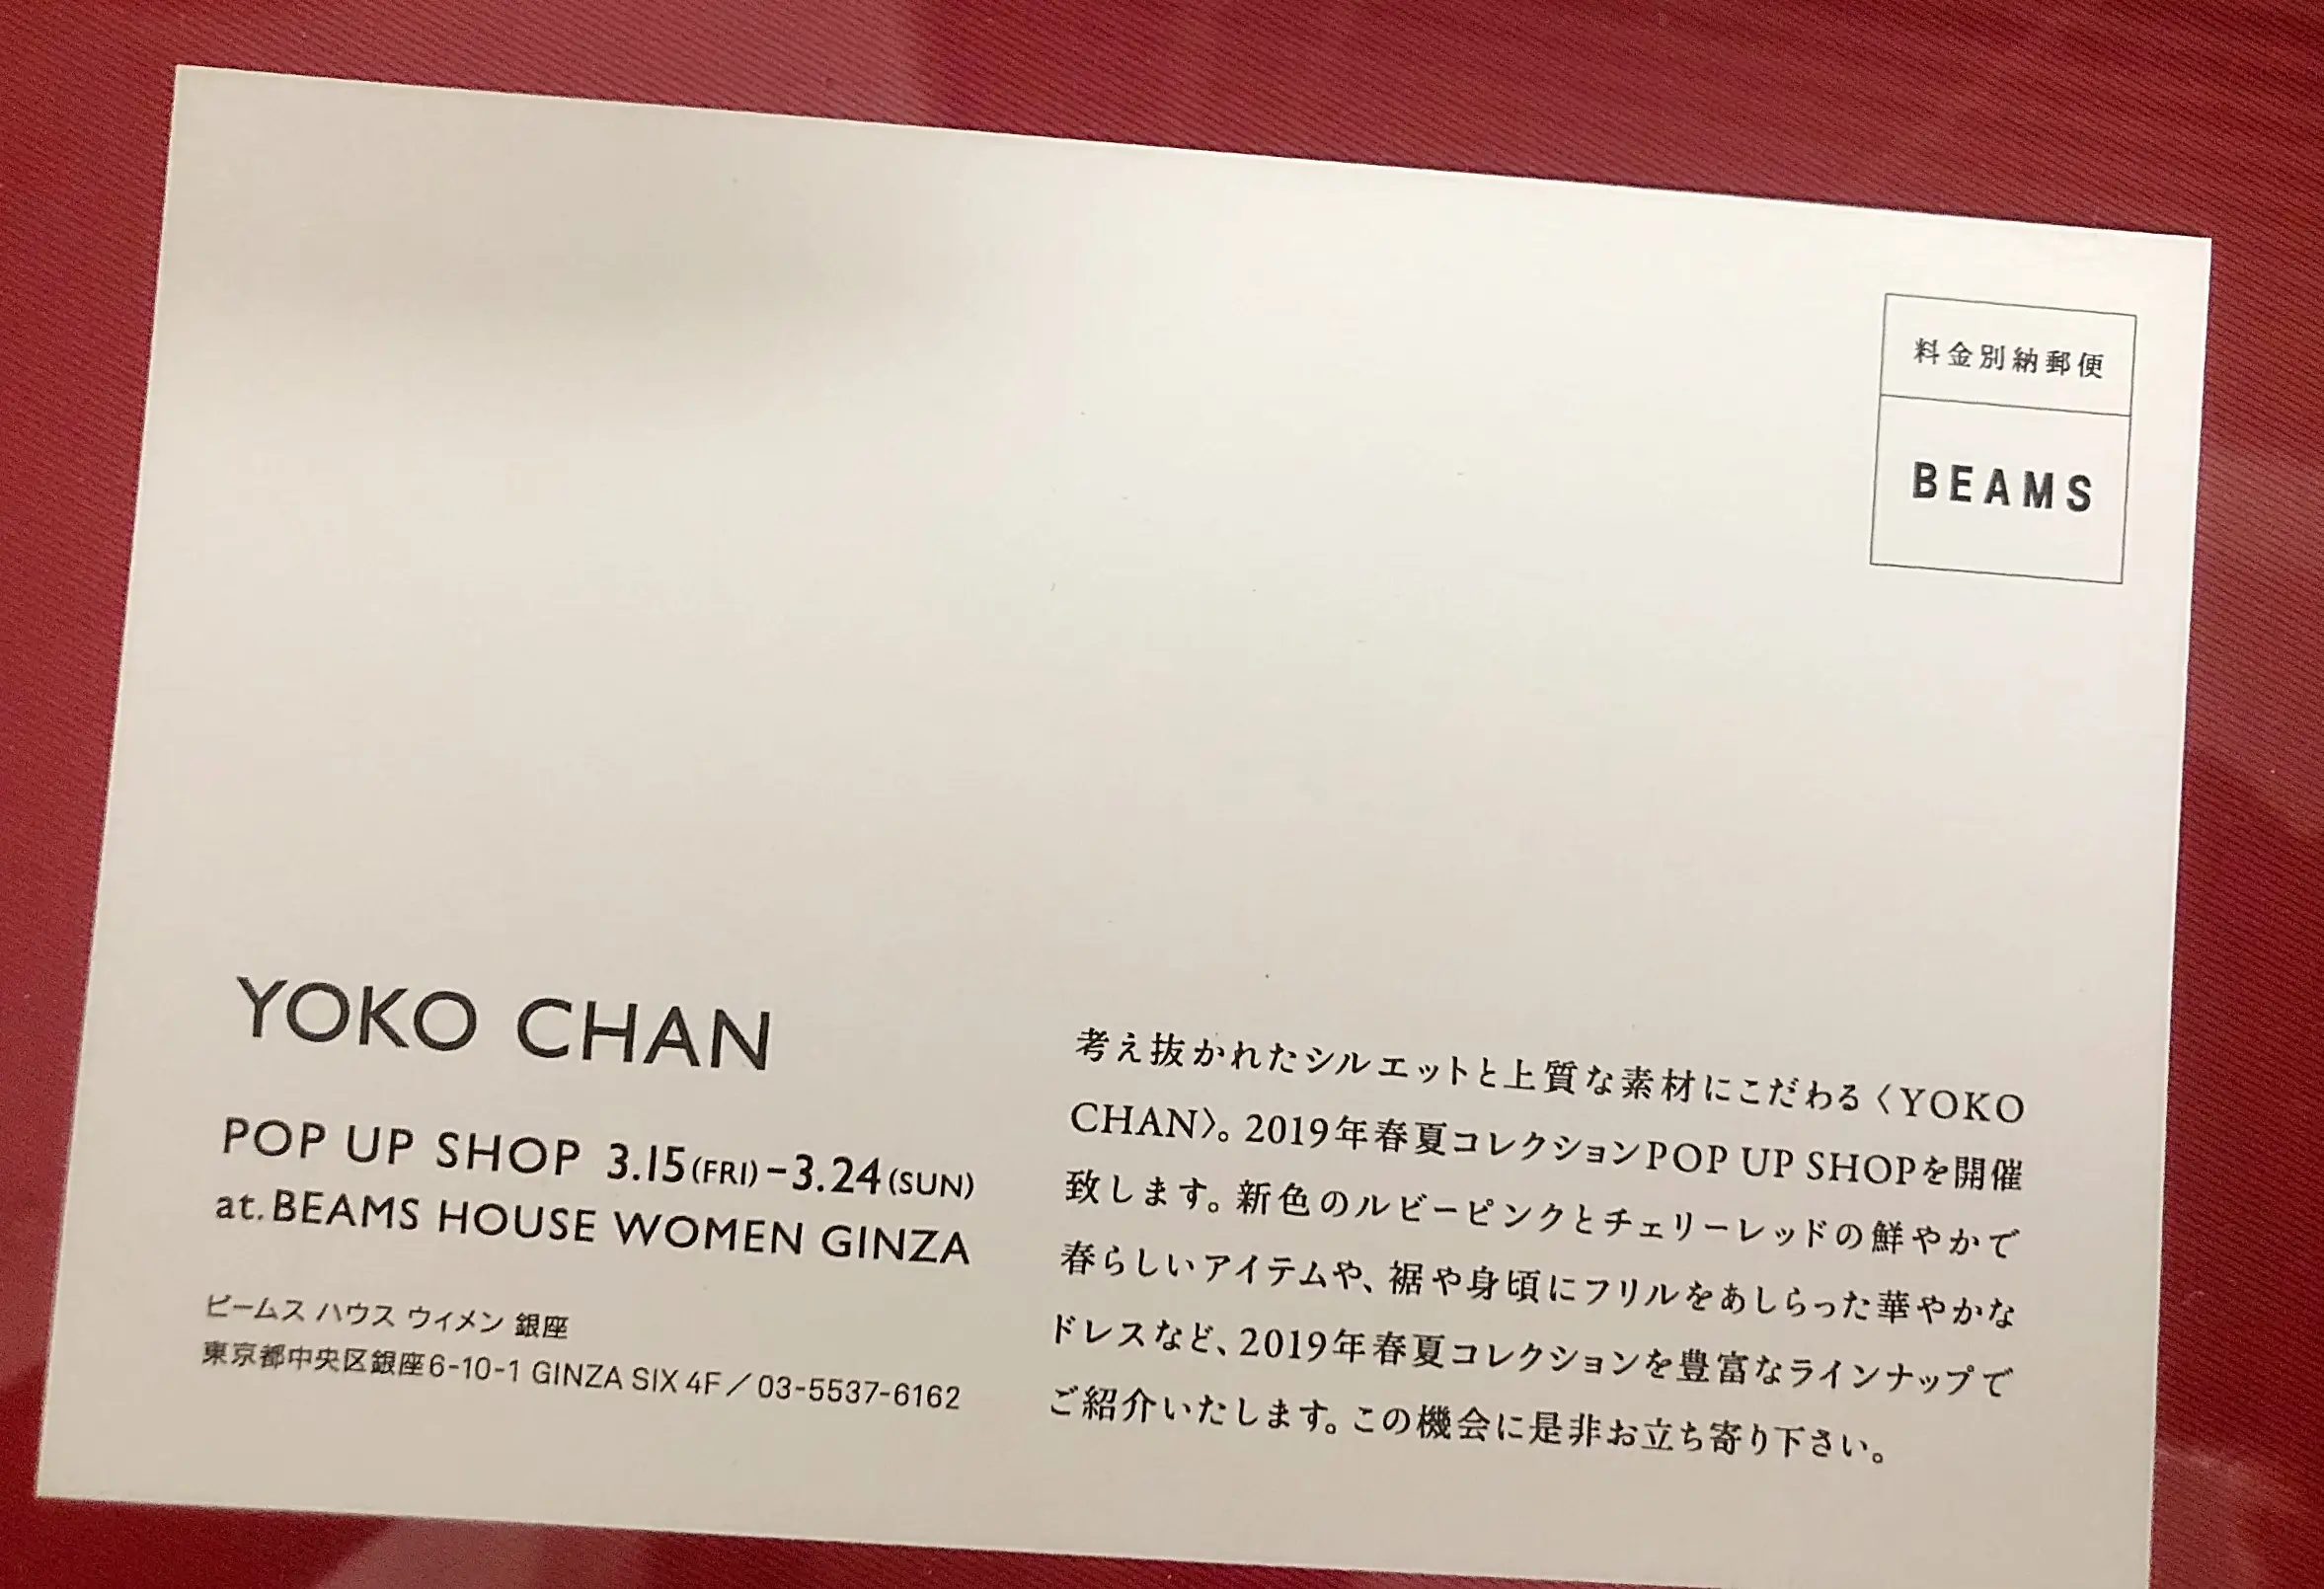 YOKO CHANのブラウス | 華組 成田千恵のブログ | 華組ブログ | Web eclat